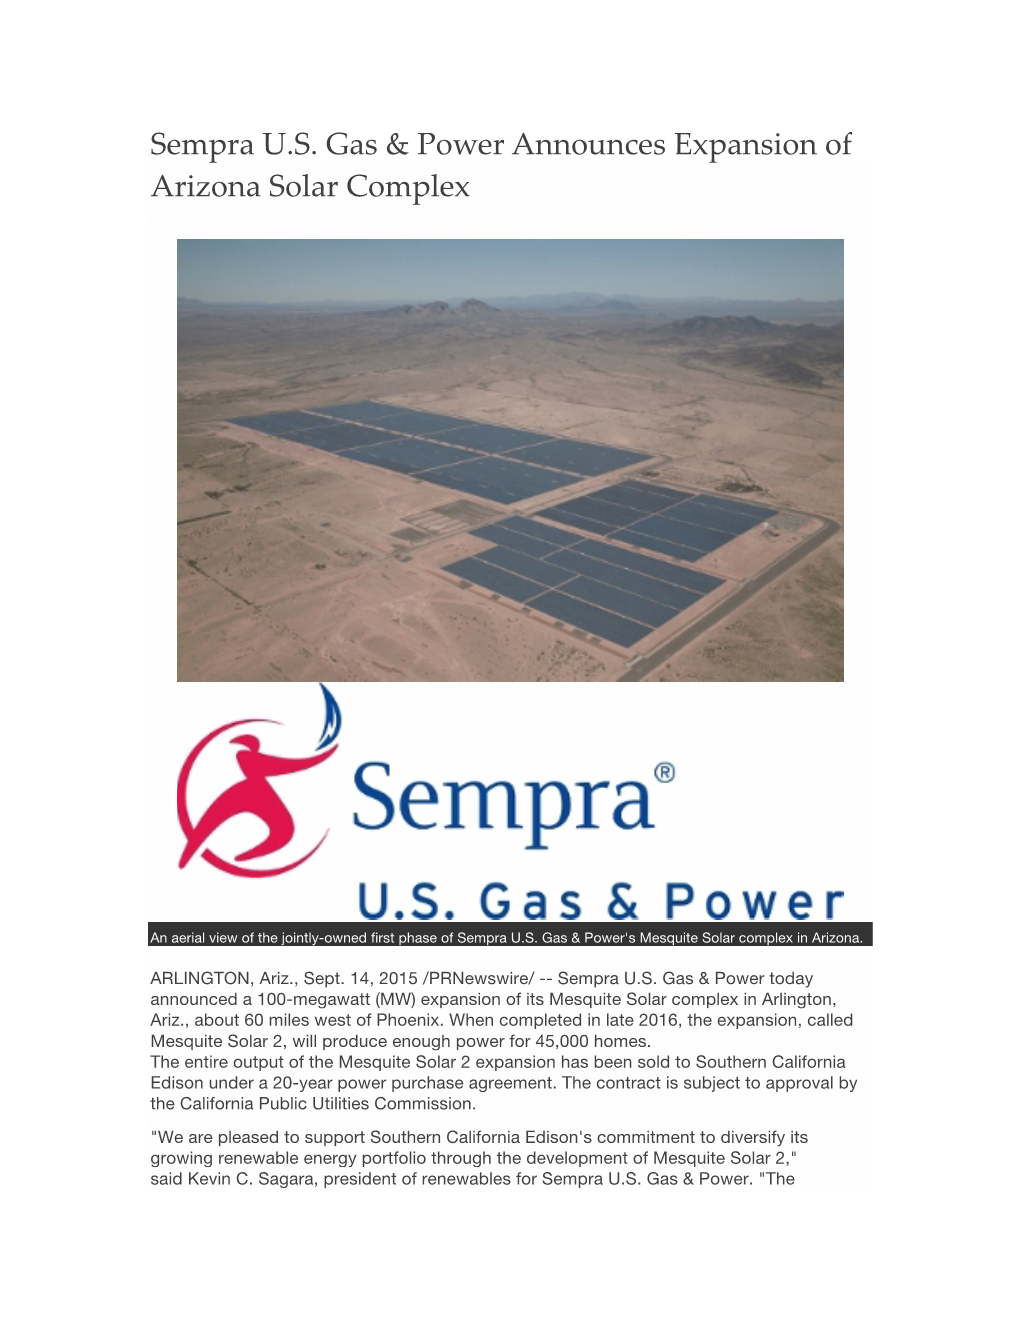 Sempra U.S. Gas & Power Announces Expansion of Arizona Solar Complex